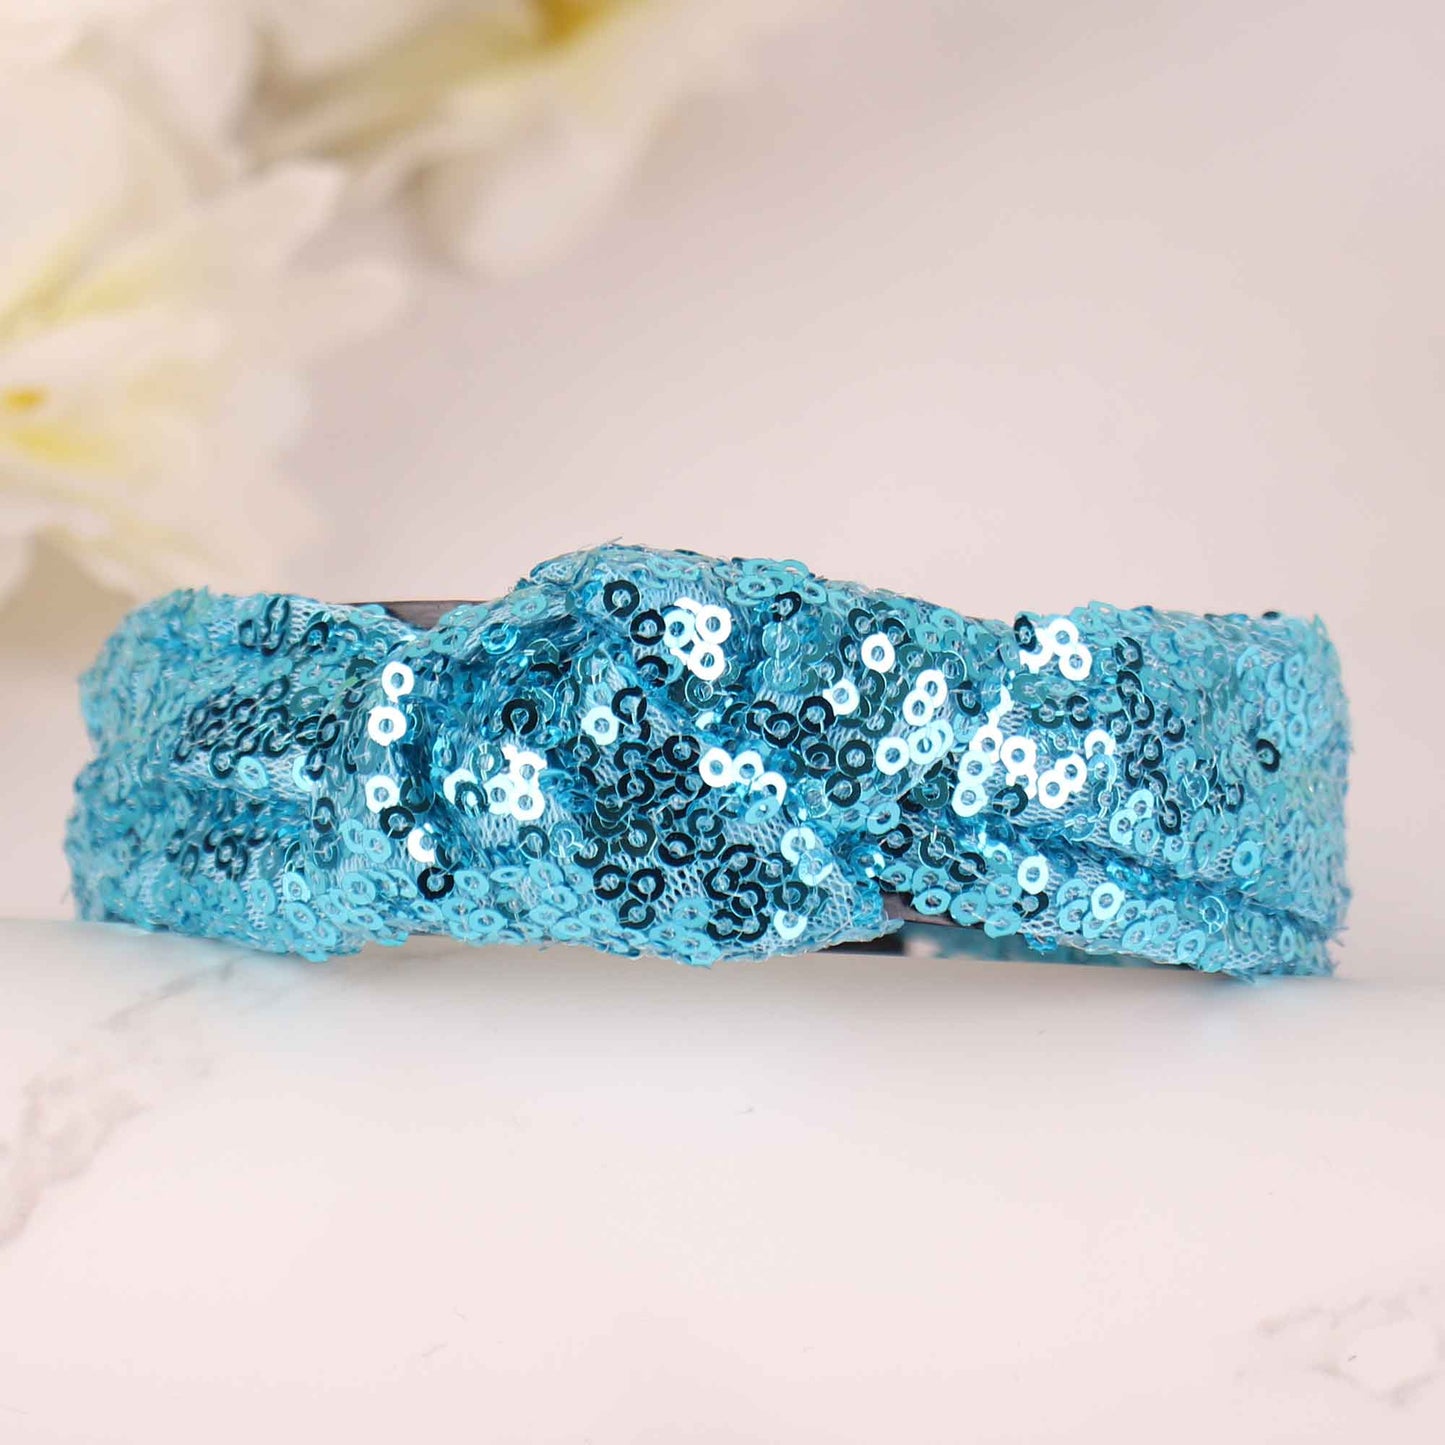 The Tuquoise Blue Gleaming Tiara Hairband